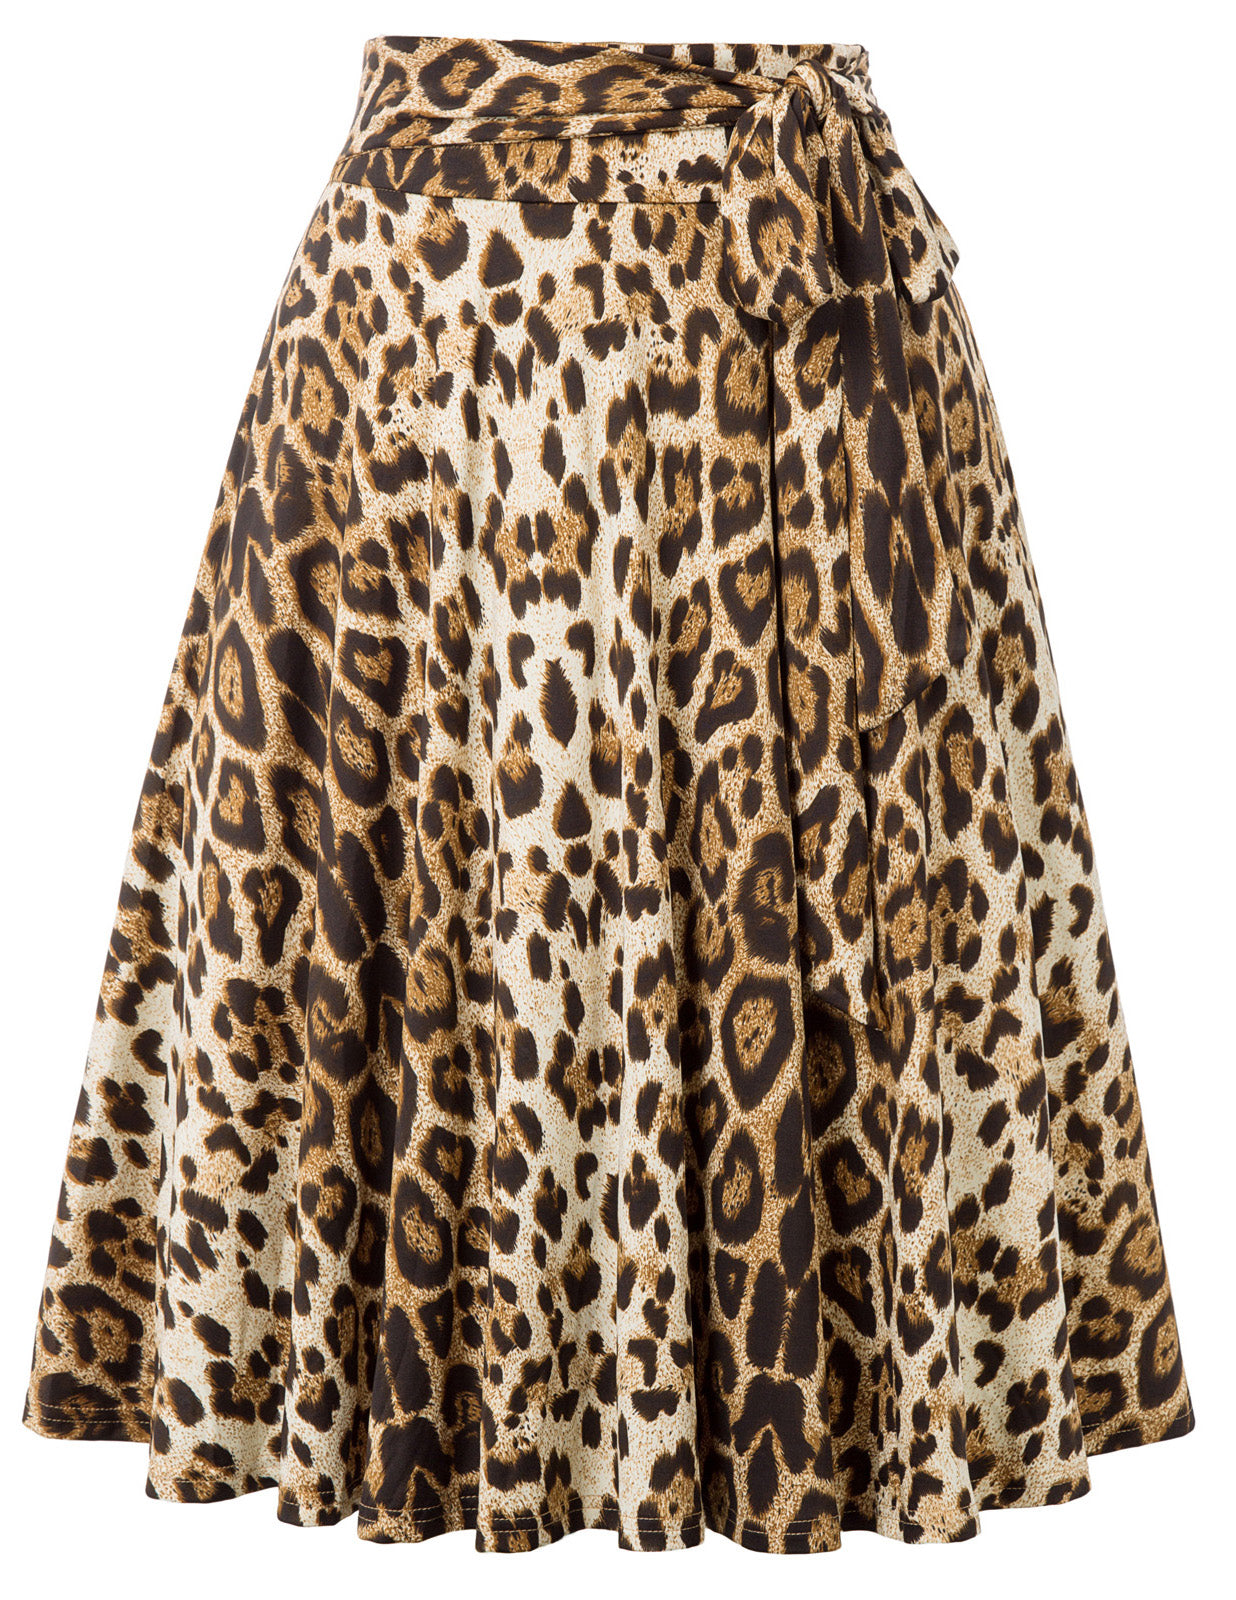 Vintage Leopard Pattern Skirt With Pockets Belt Decorated Flared A-Line ...